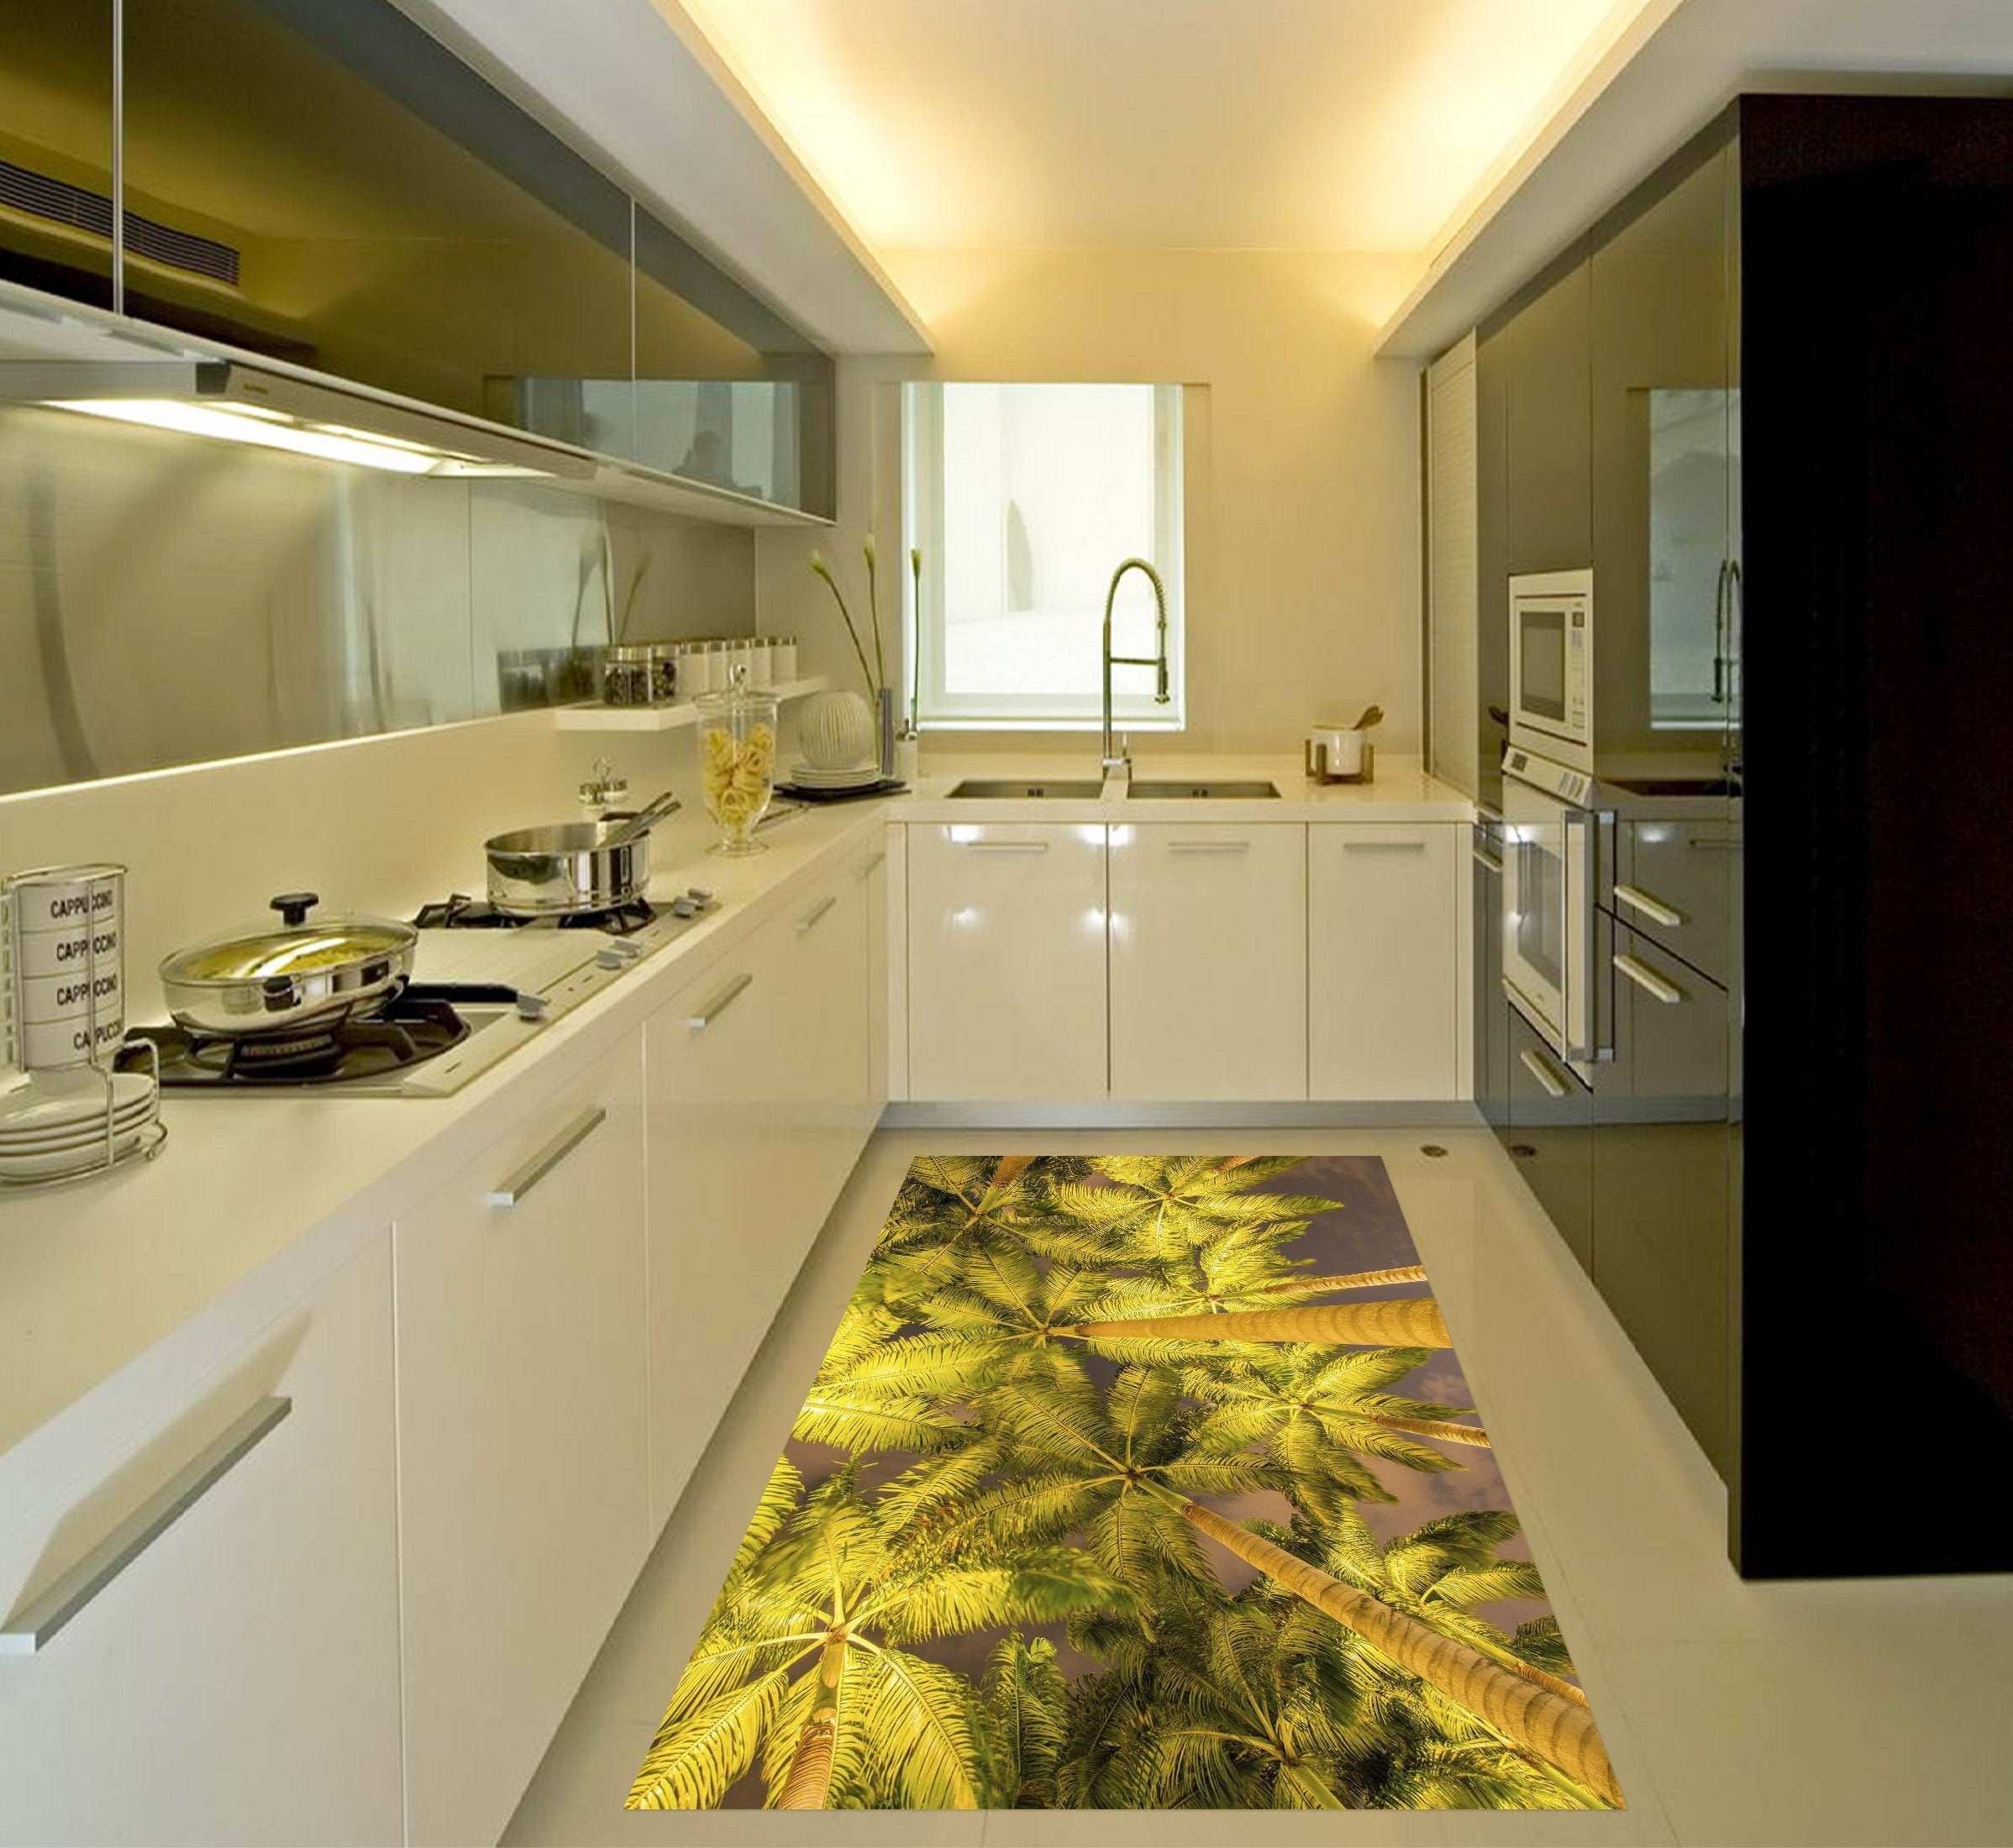 3D Tall Coconut Trees 677 Kitchen Mat Floor Mural Wallpaper AJ Wallpaper 